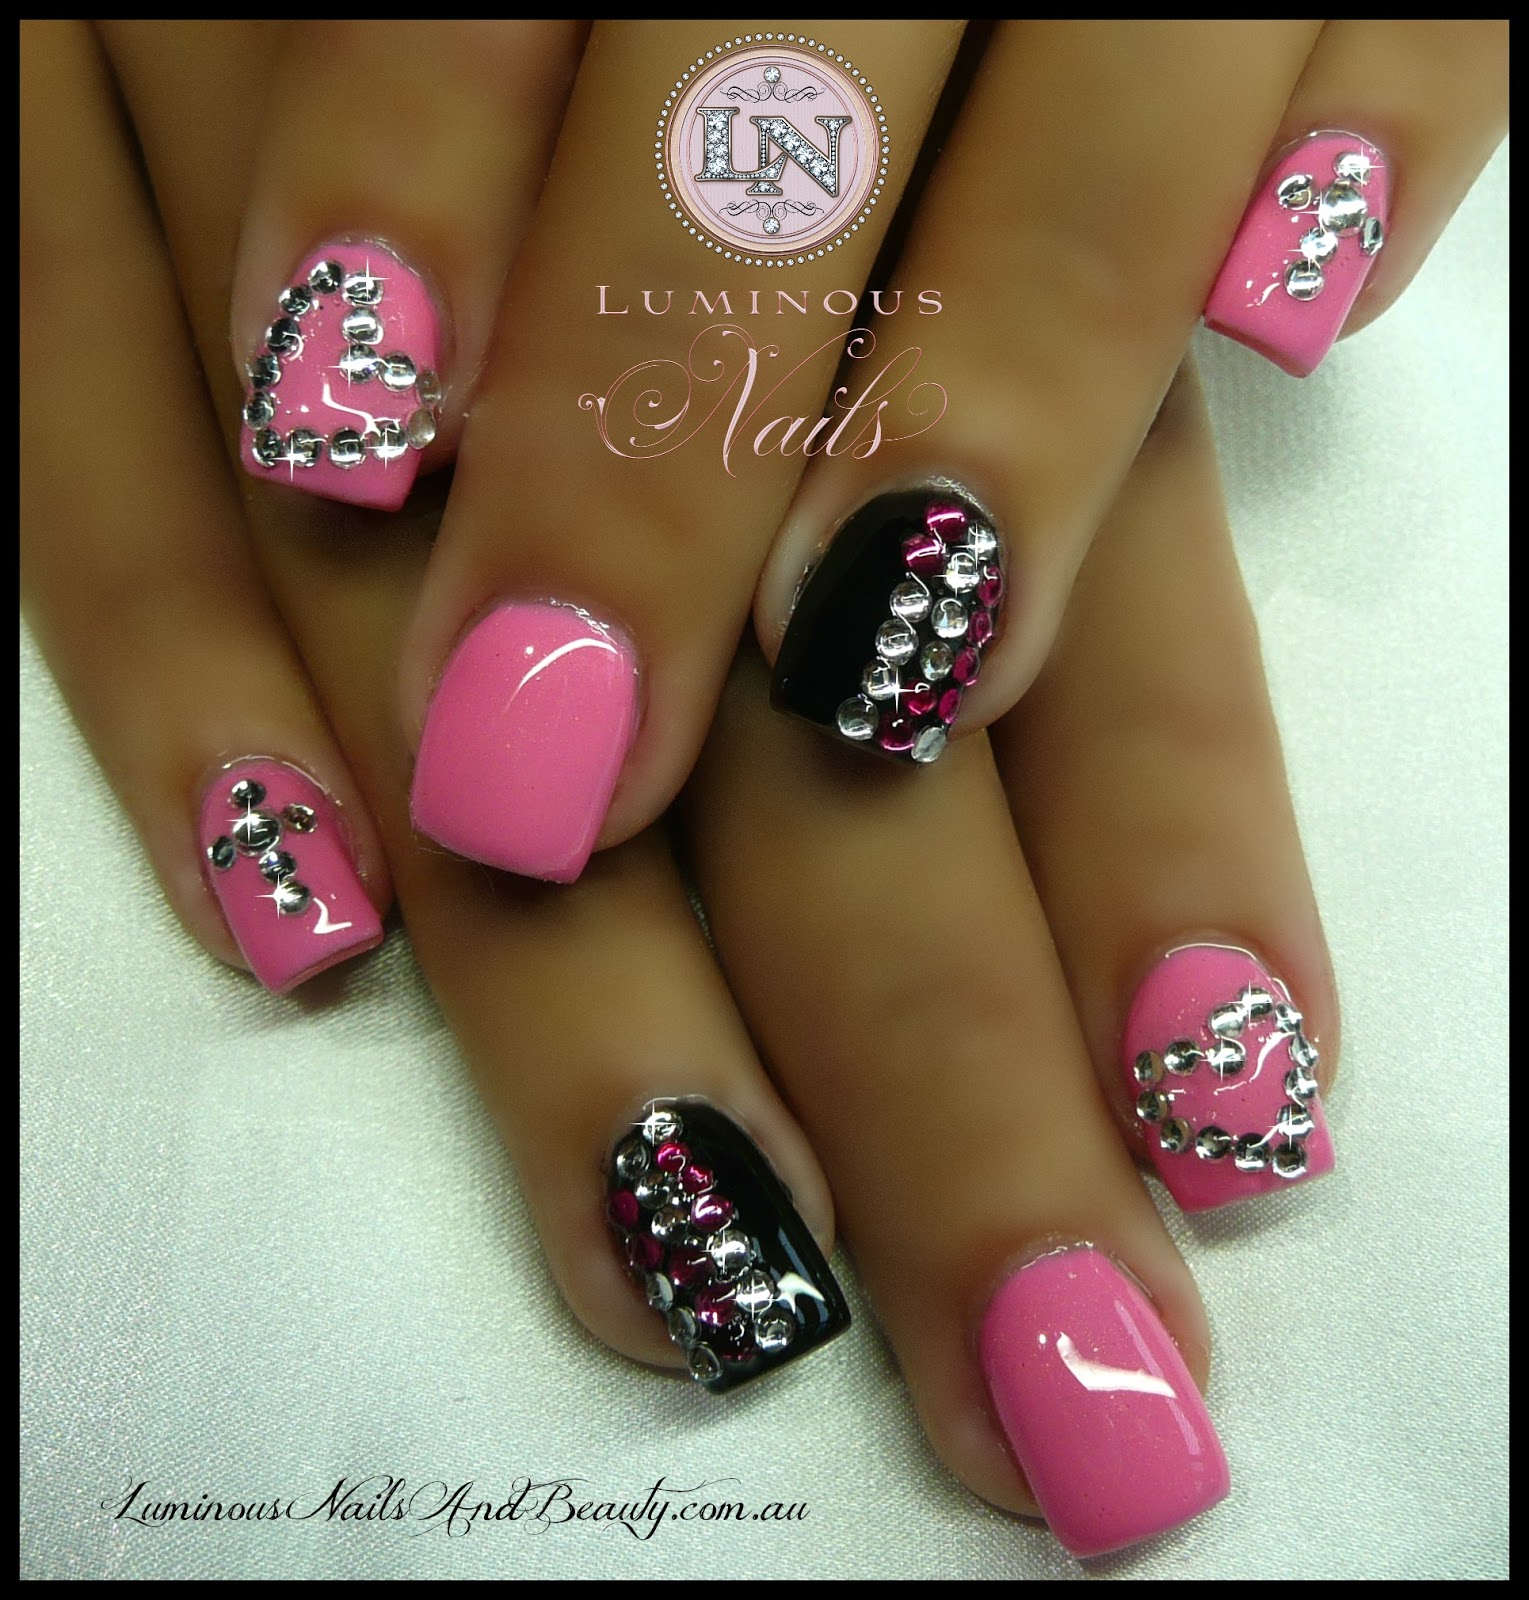 http://3.bp.blogspot.com/-Nxq-SeOVkPU/UMc4g4jMfEI/AAAAAAAAAWY/Vvlcaf-RQ2I/s1600/Luminous+Nails+And+Beauty,+Gold+Coast+Queensland,+Acrylic+Nails,+Gel+Nails,+Sculptured+Acrylic+with+Custom+Pink+Gel,+Mani+Q+Black+101,+Pink+&amp;+Clear+Crystals.+.jpg